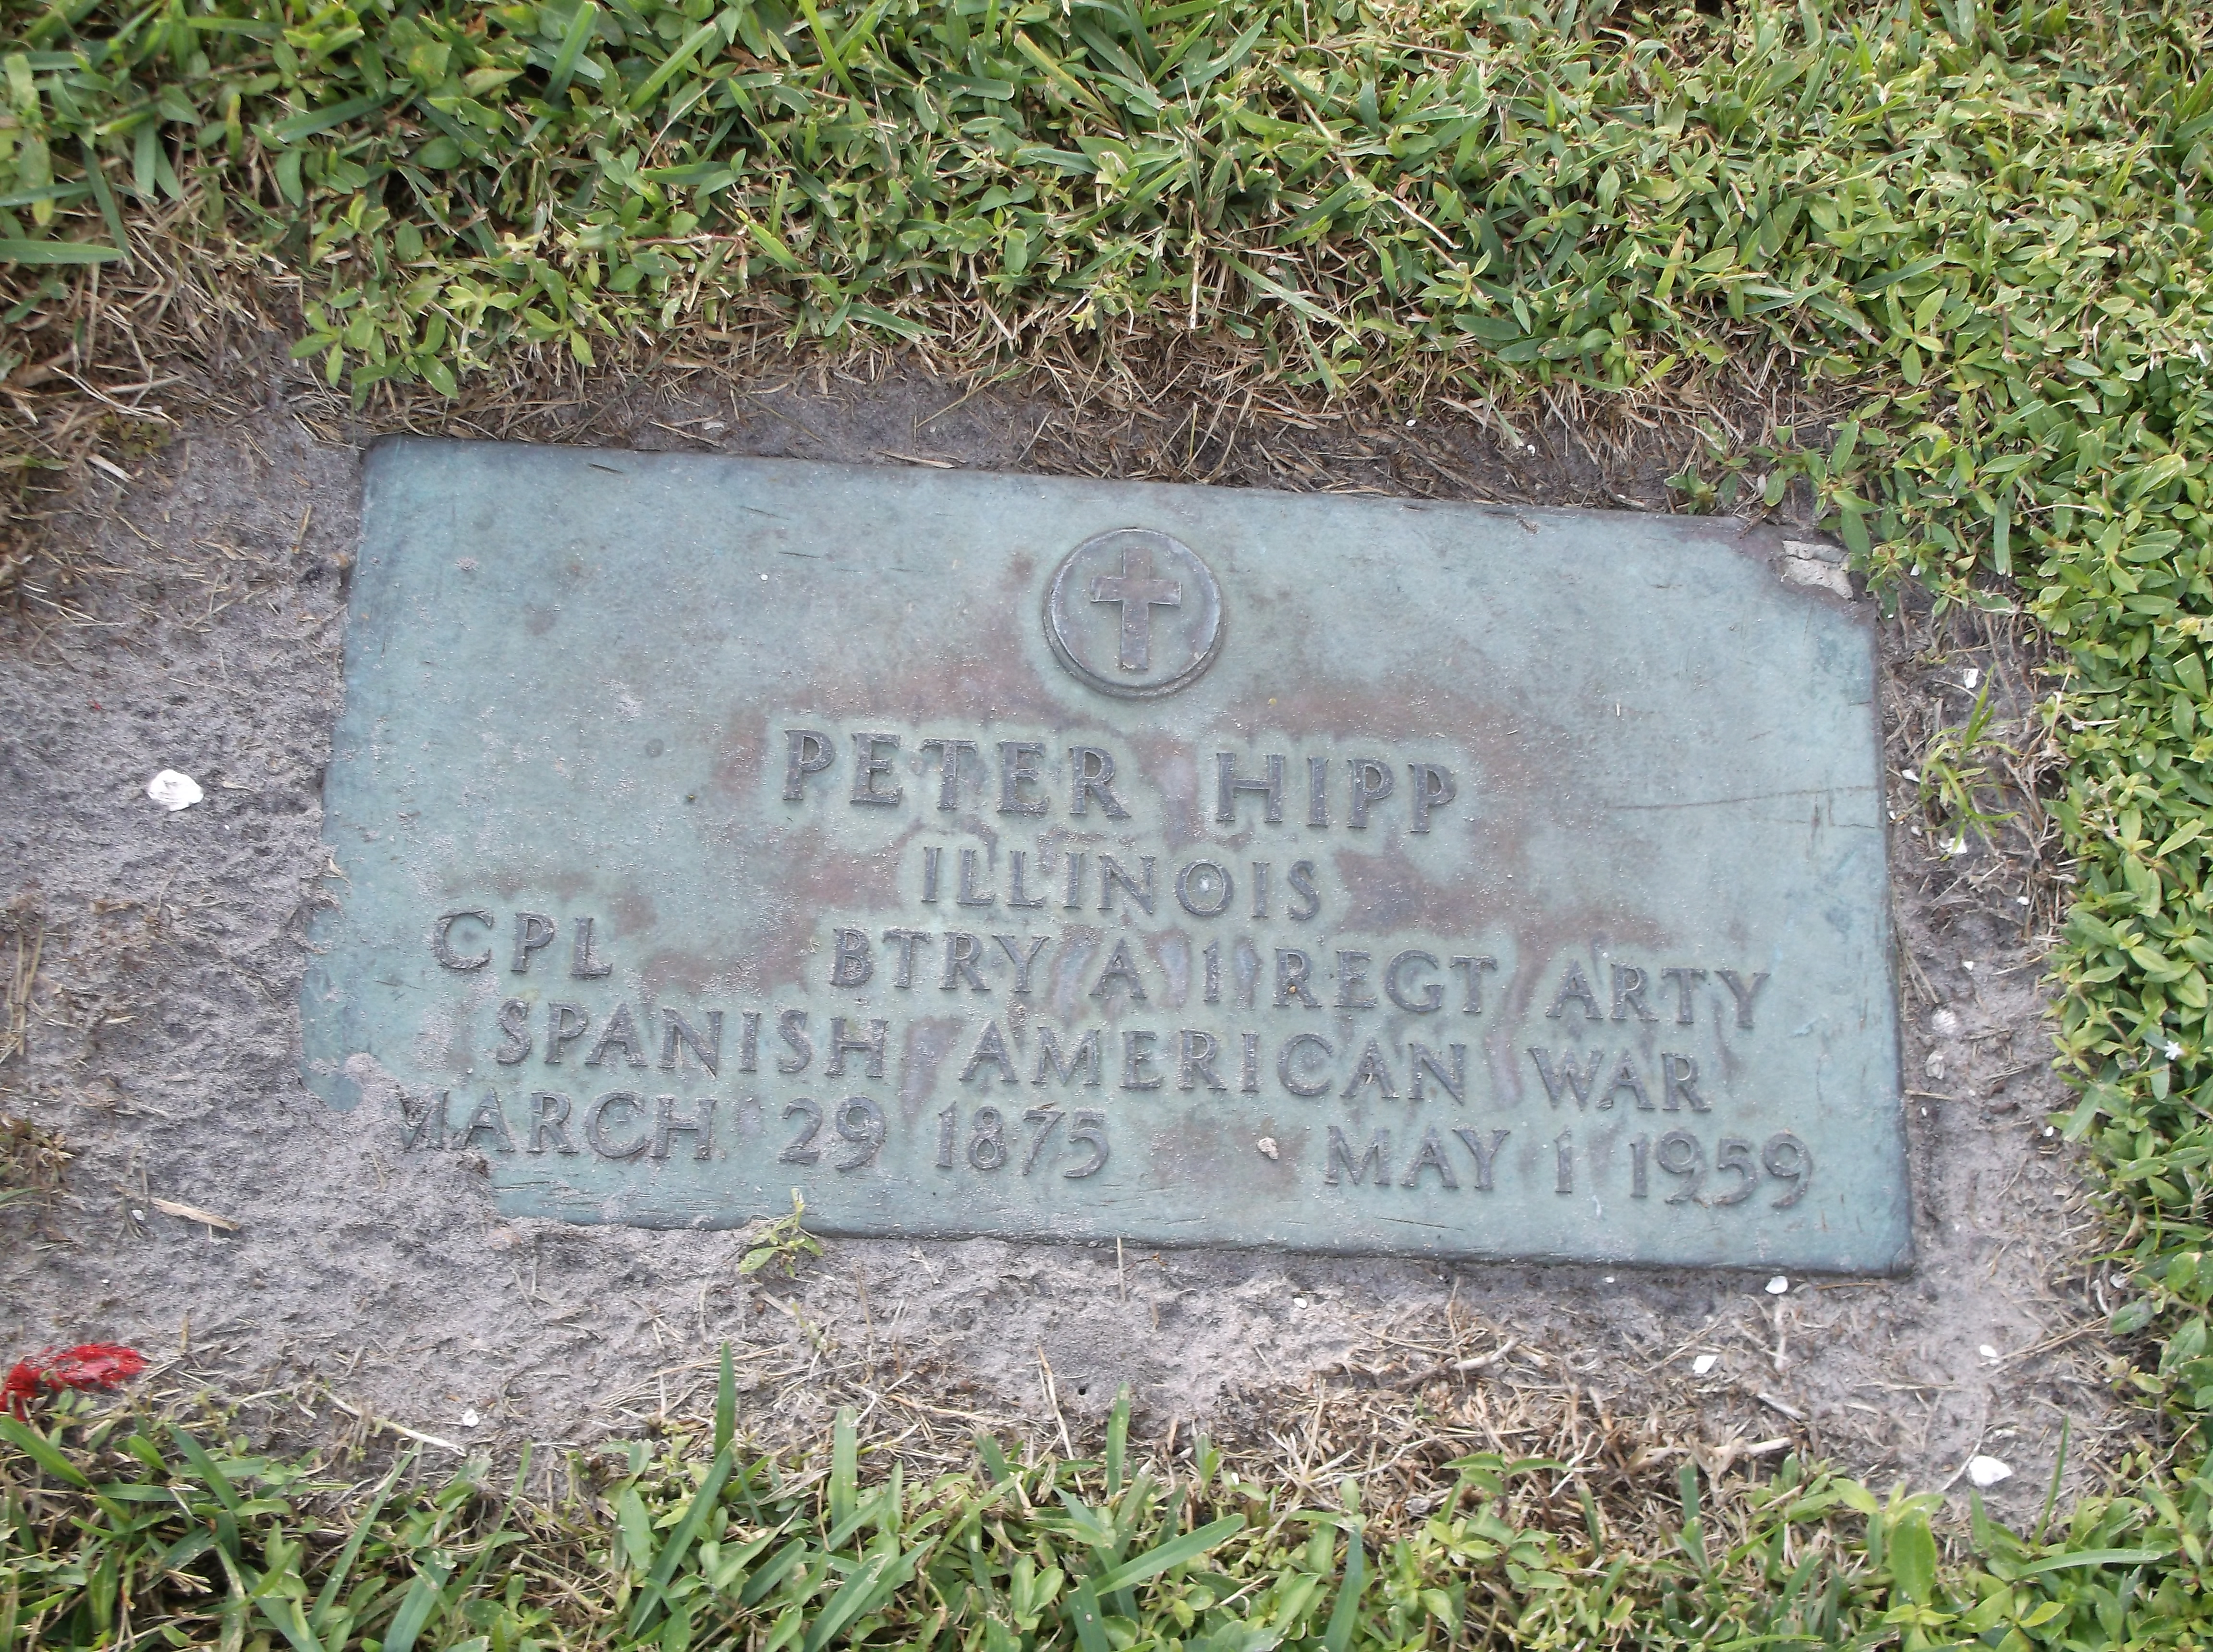 Peter Hipp